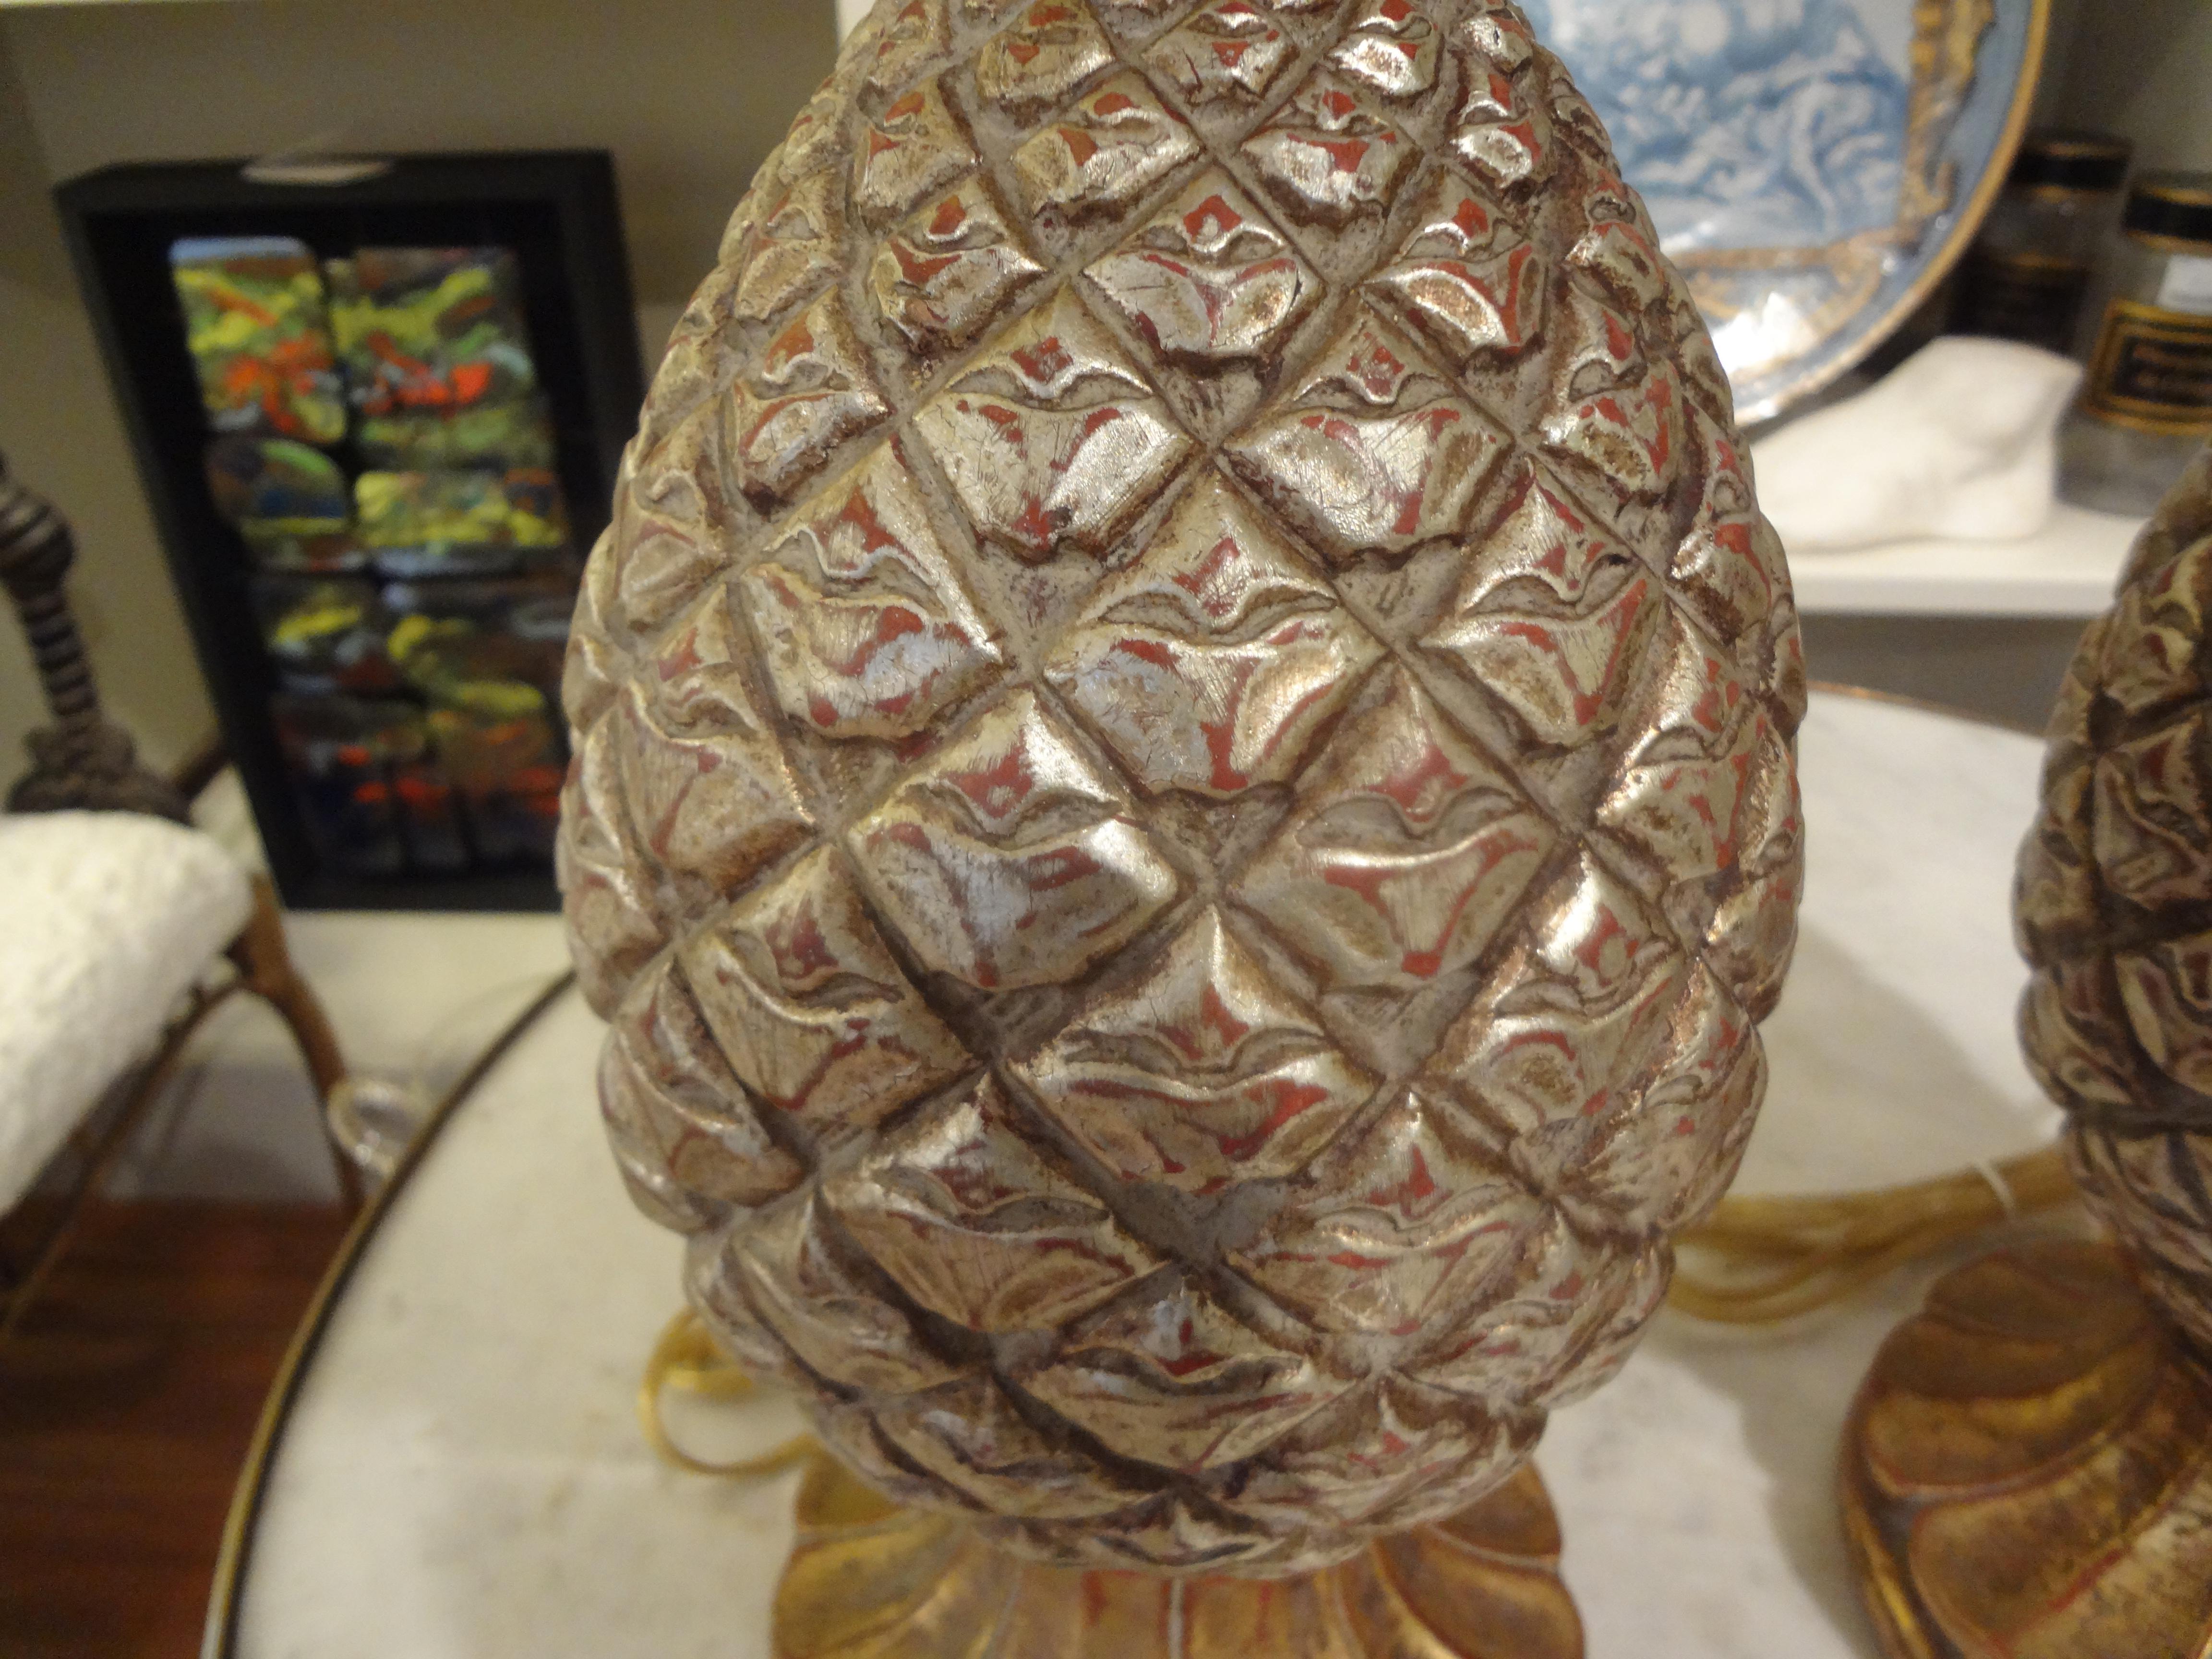 vintage brass pineapple lamp